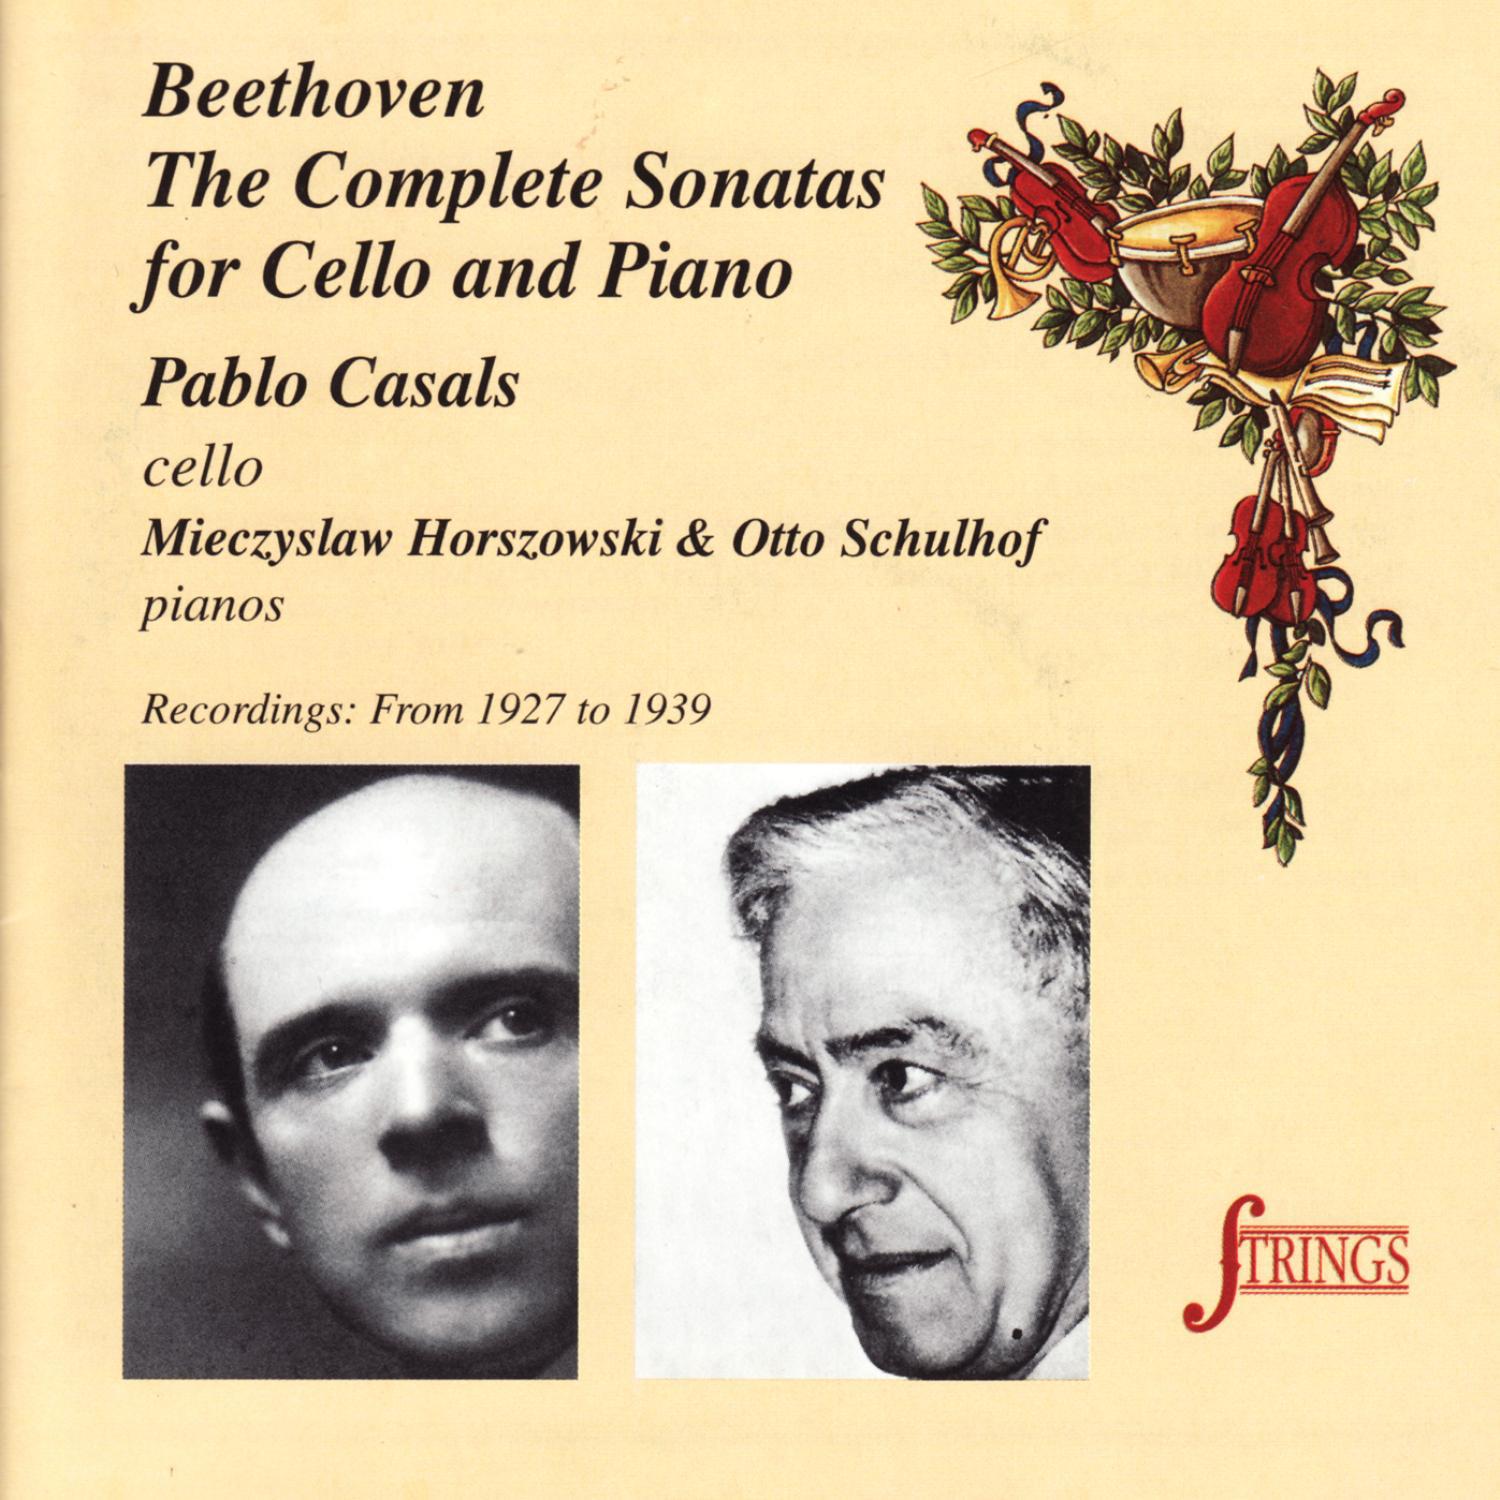 Sonata No. 4 for Cello and Piano in C Major, Op. 102 No. 1: I. Andante, Allegro vivace